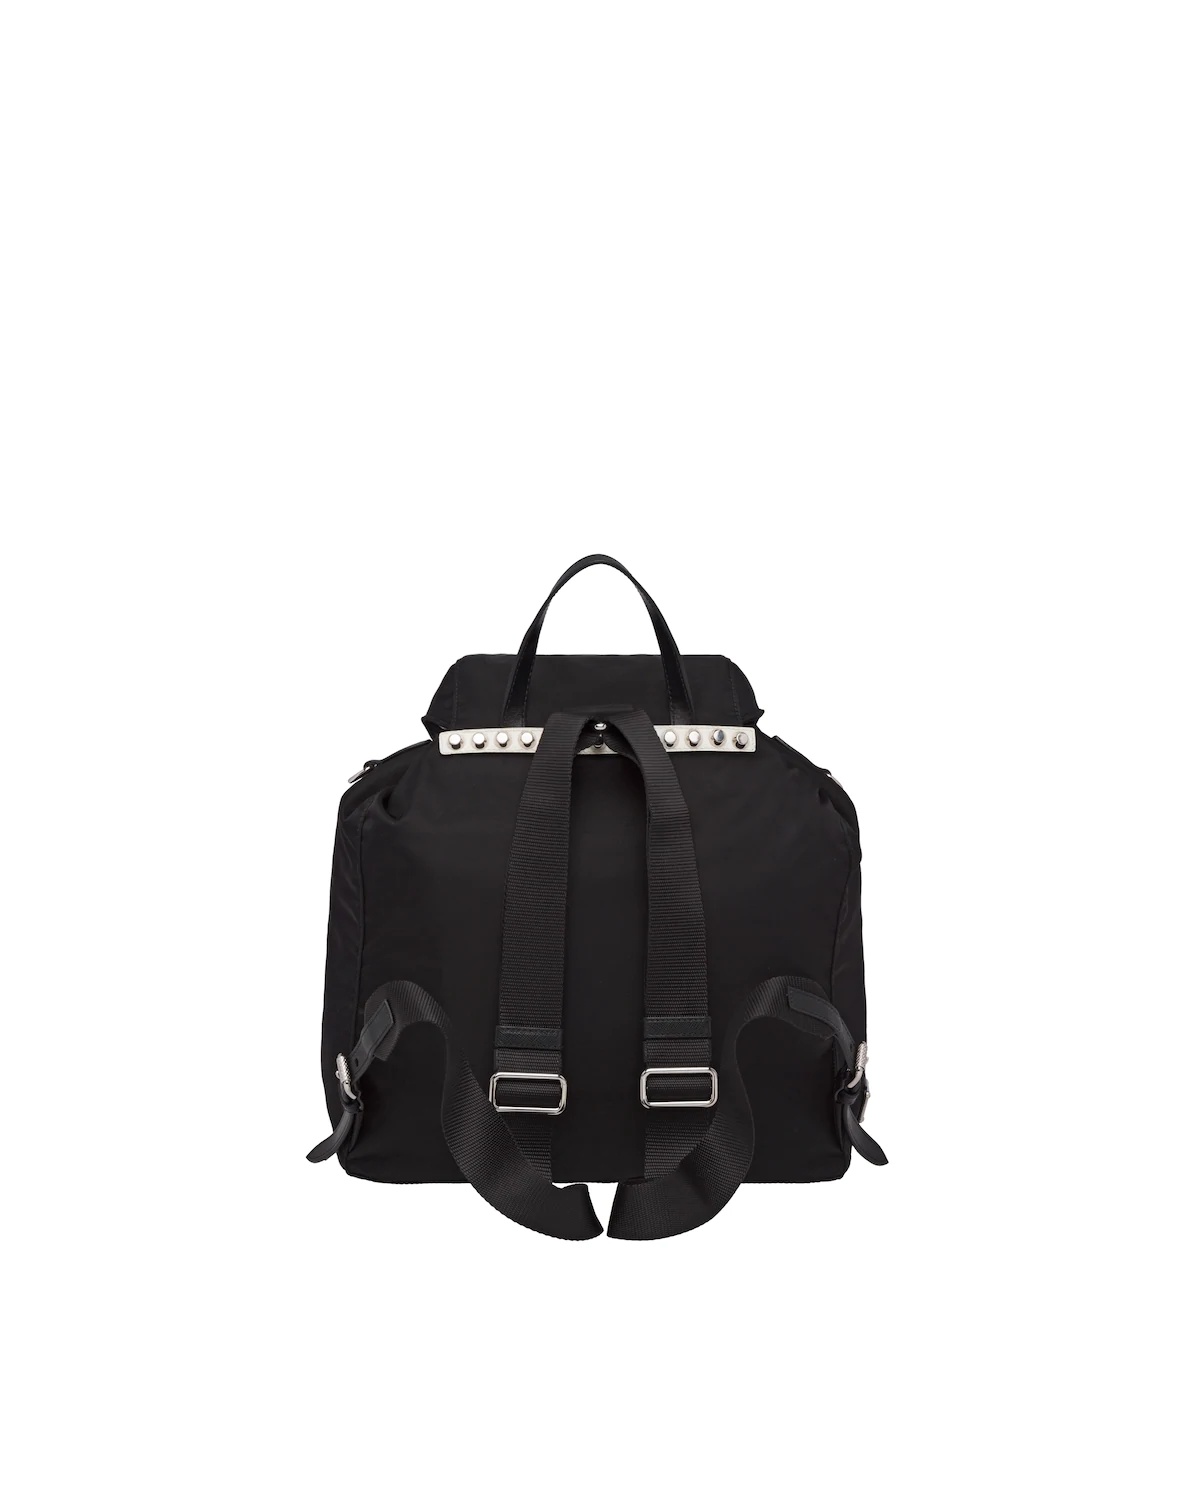 Prada Black Nylon Backpack - 4